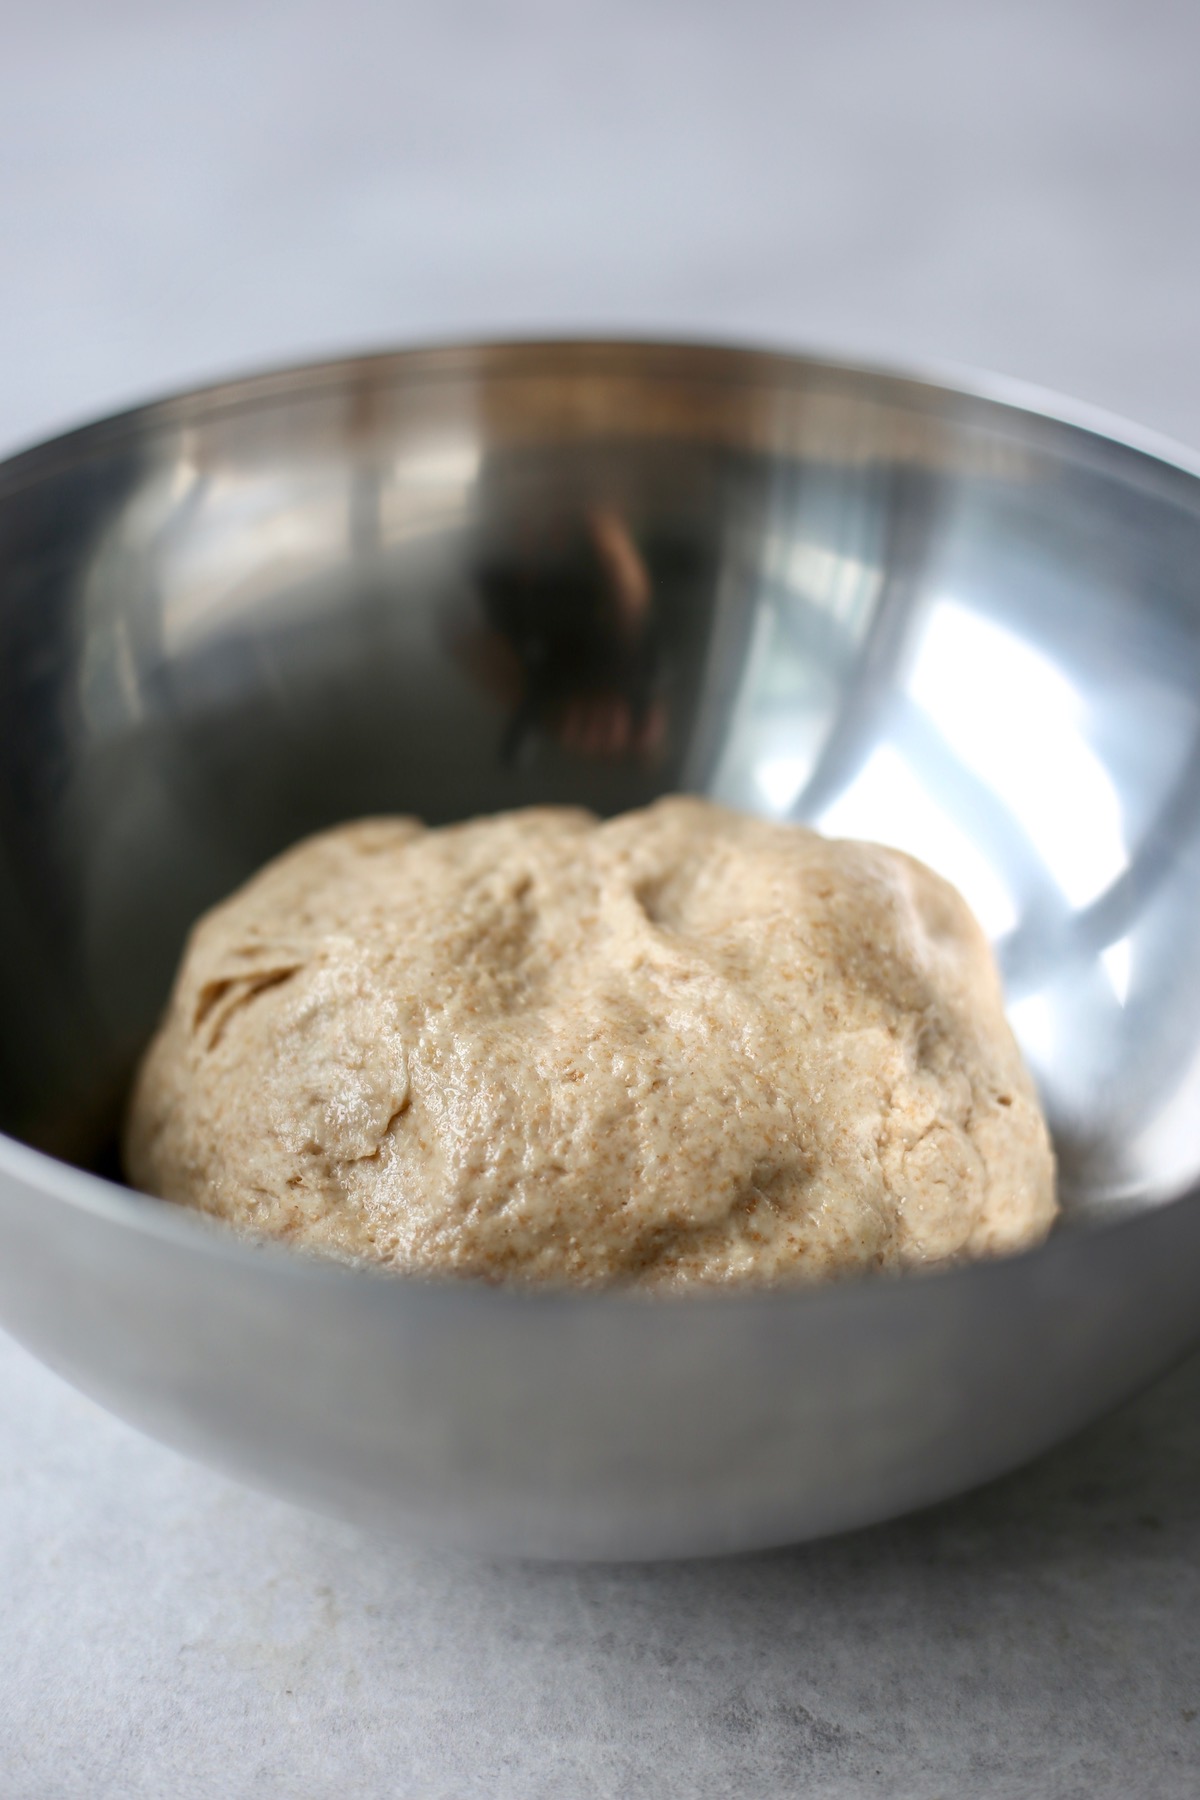 proof the bread dough